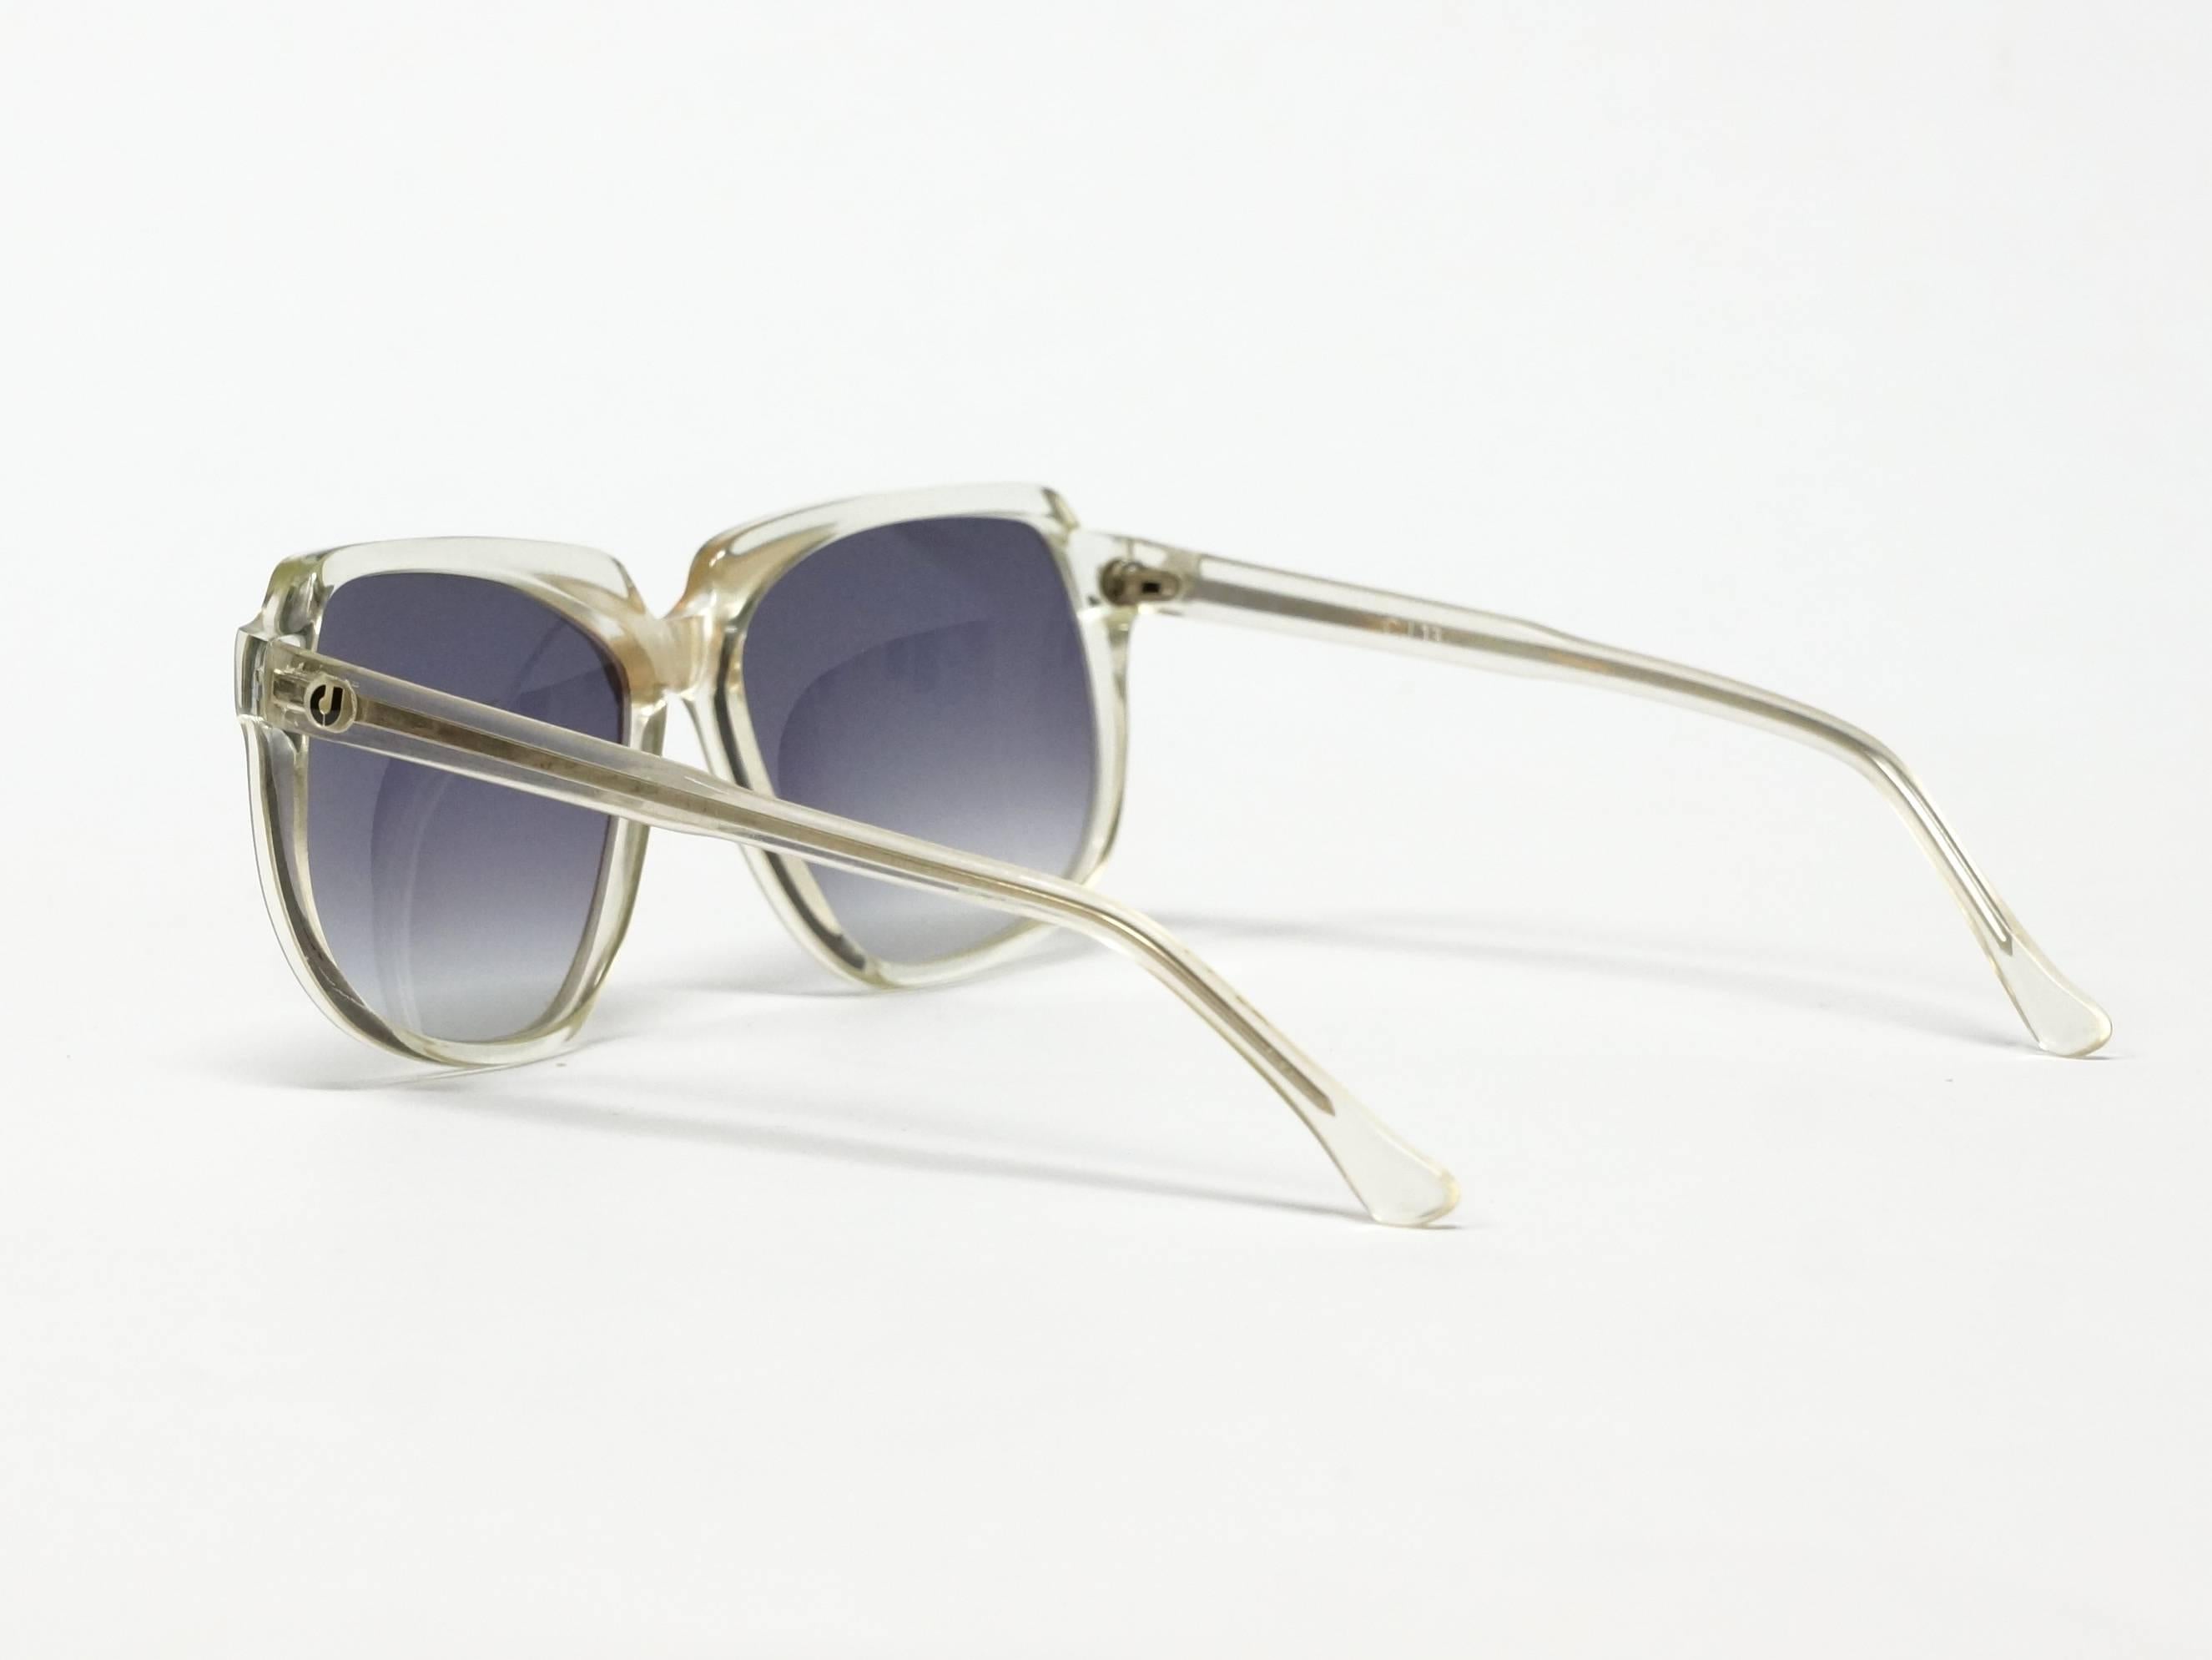 Gray 1980s Charles Jourdan Clear Vintage Sunglasses model CJ13 For Sale